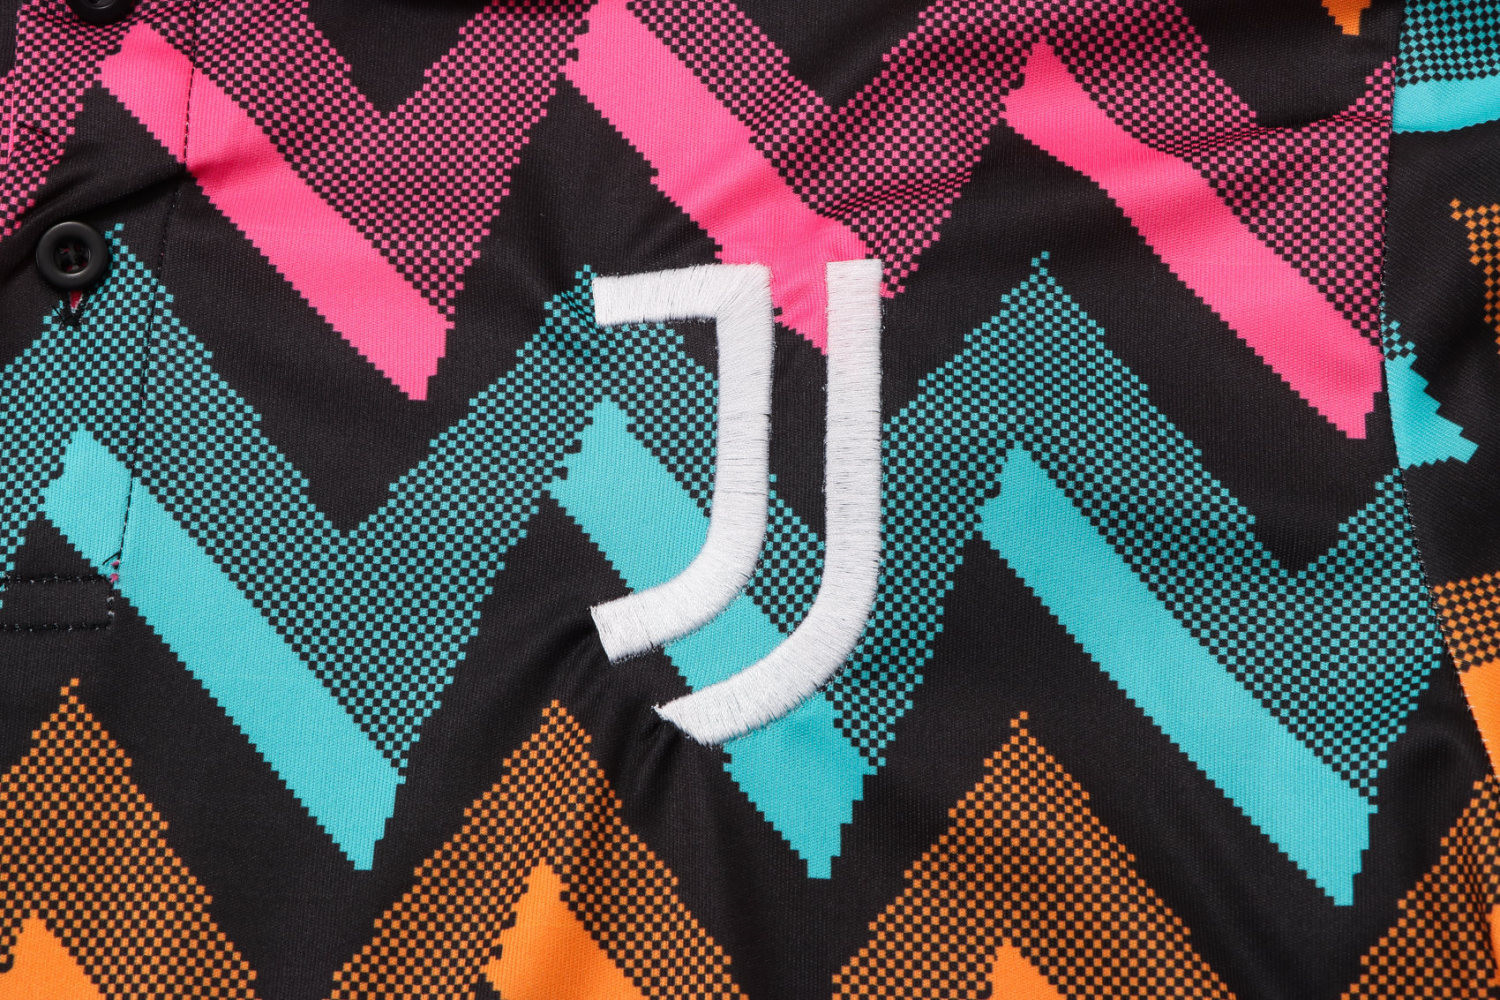 Juventus Soccer Polo Jersey Replica Pink Mens 2022/23